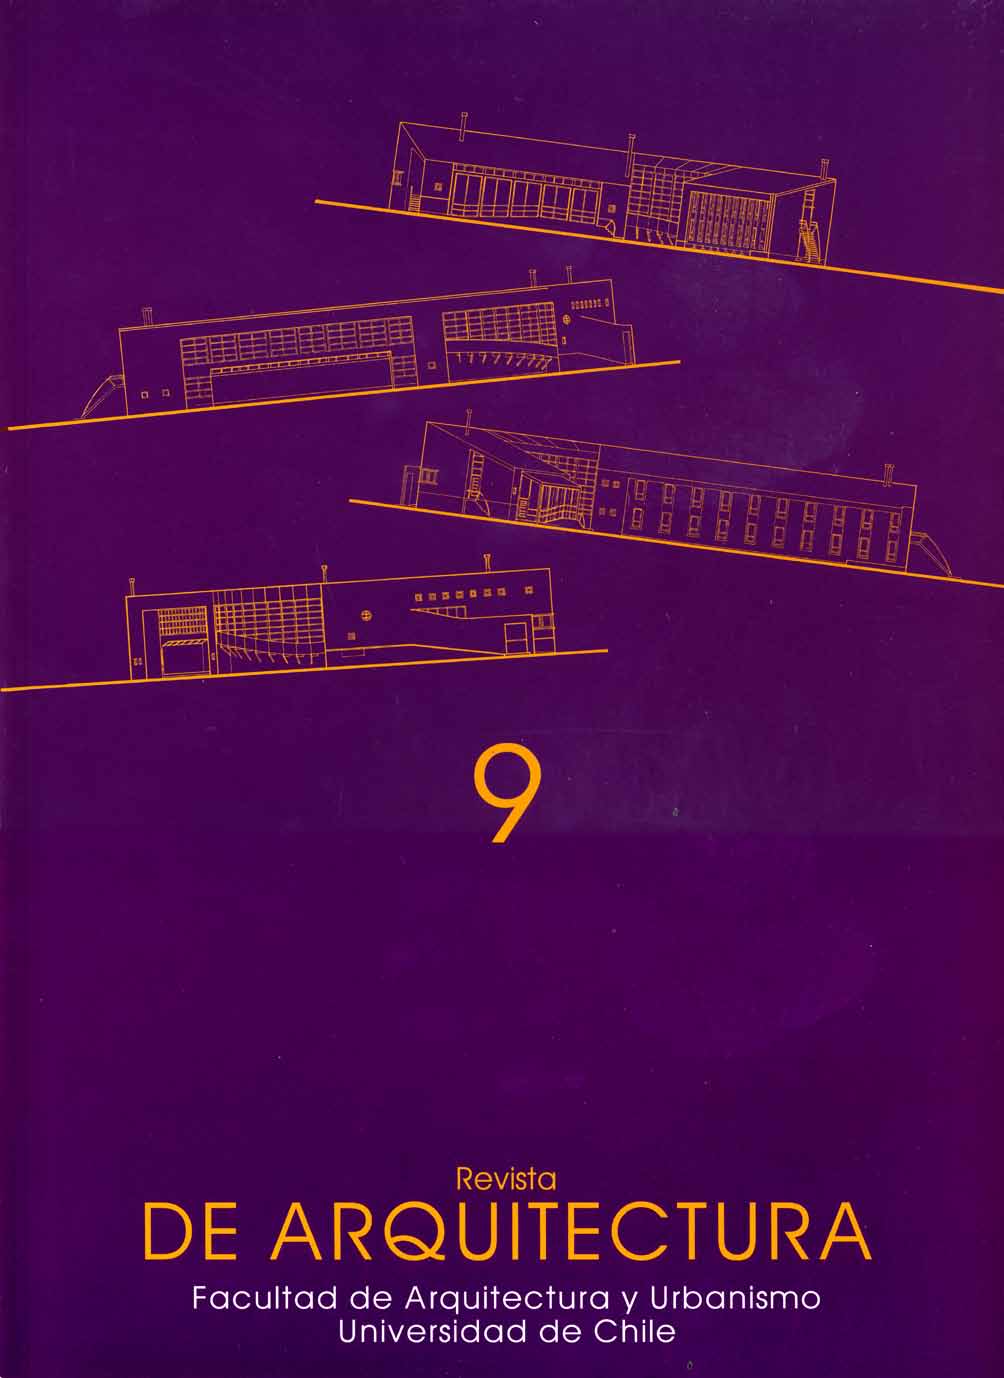 							View Vol. 8 No. 9 (1997): De Arquitectura
						